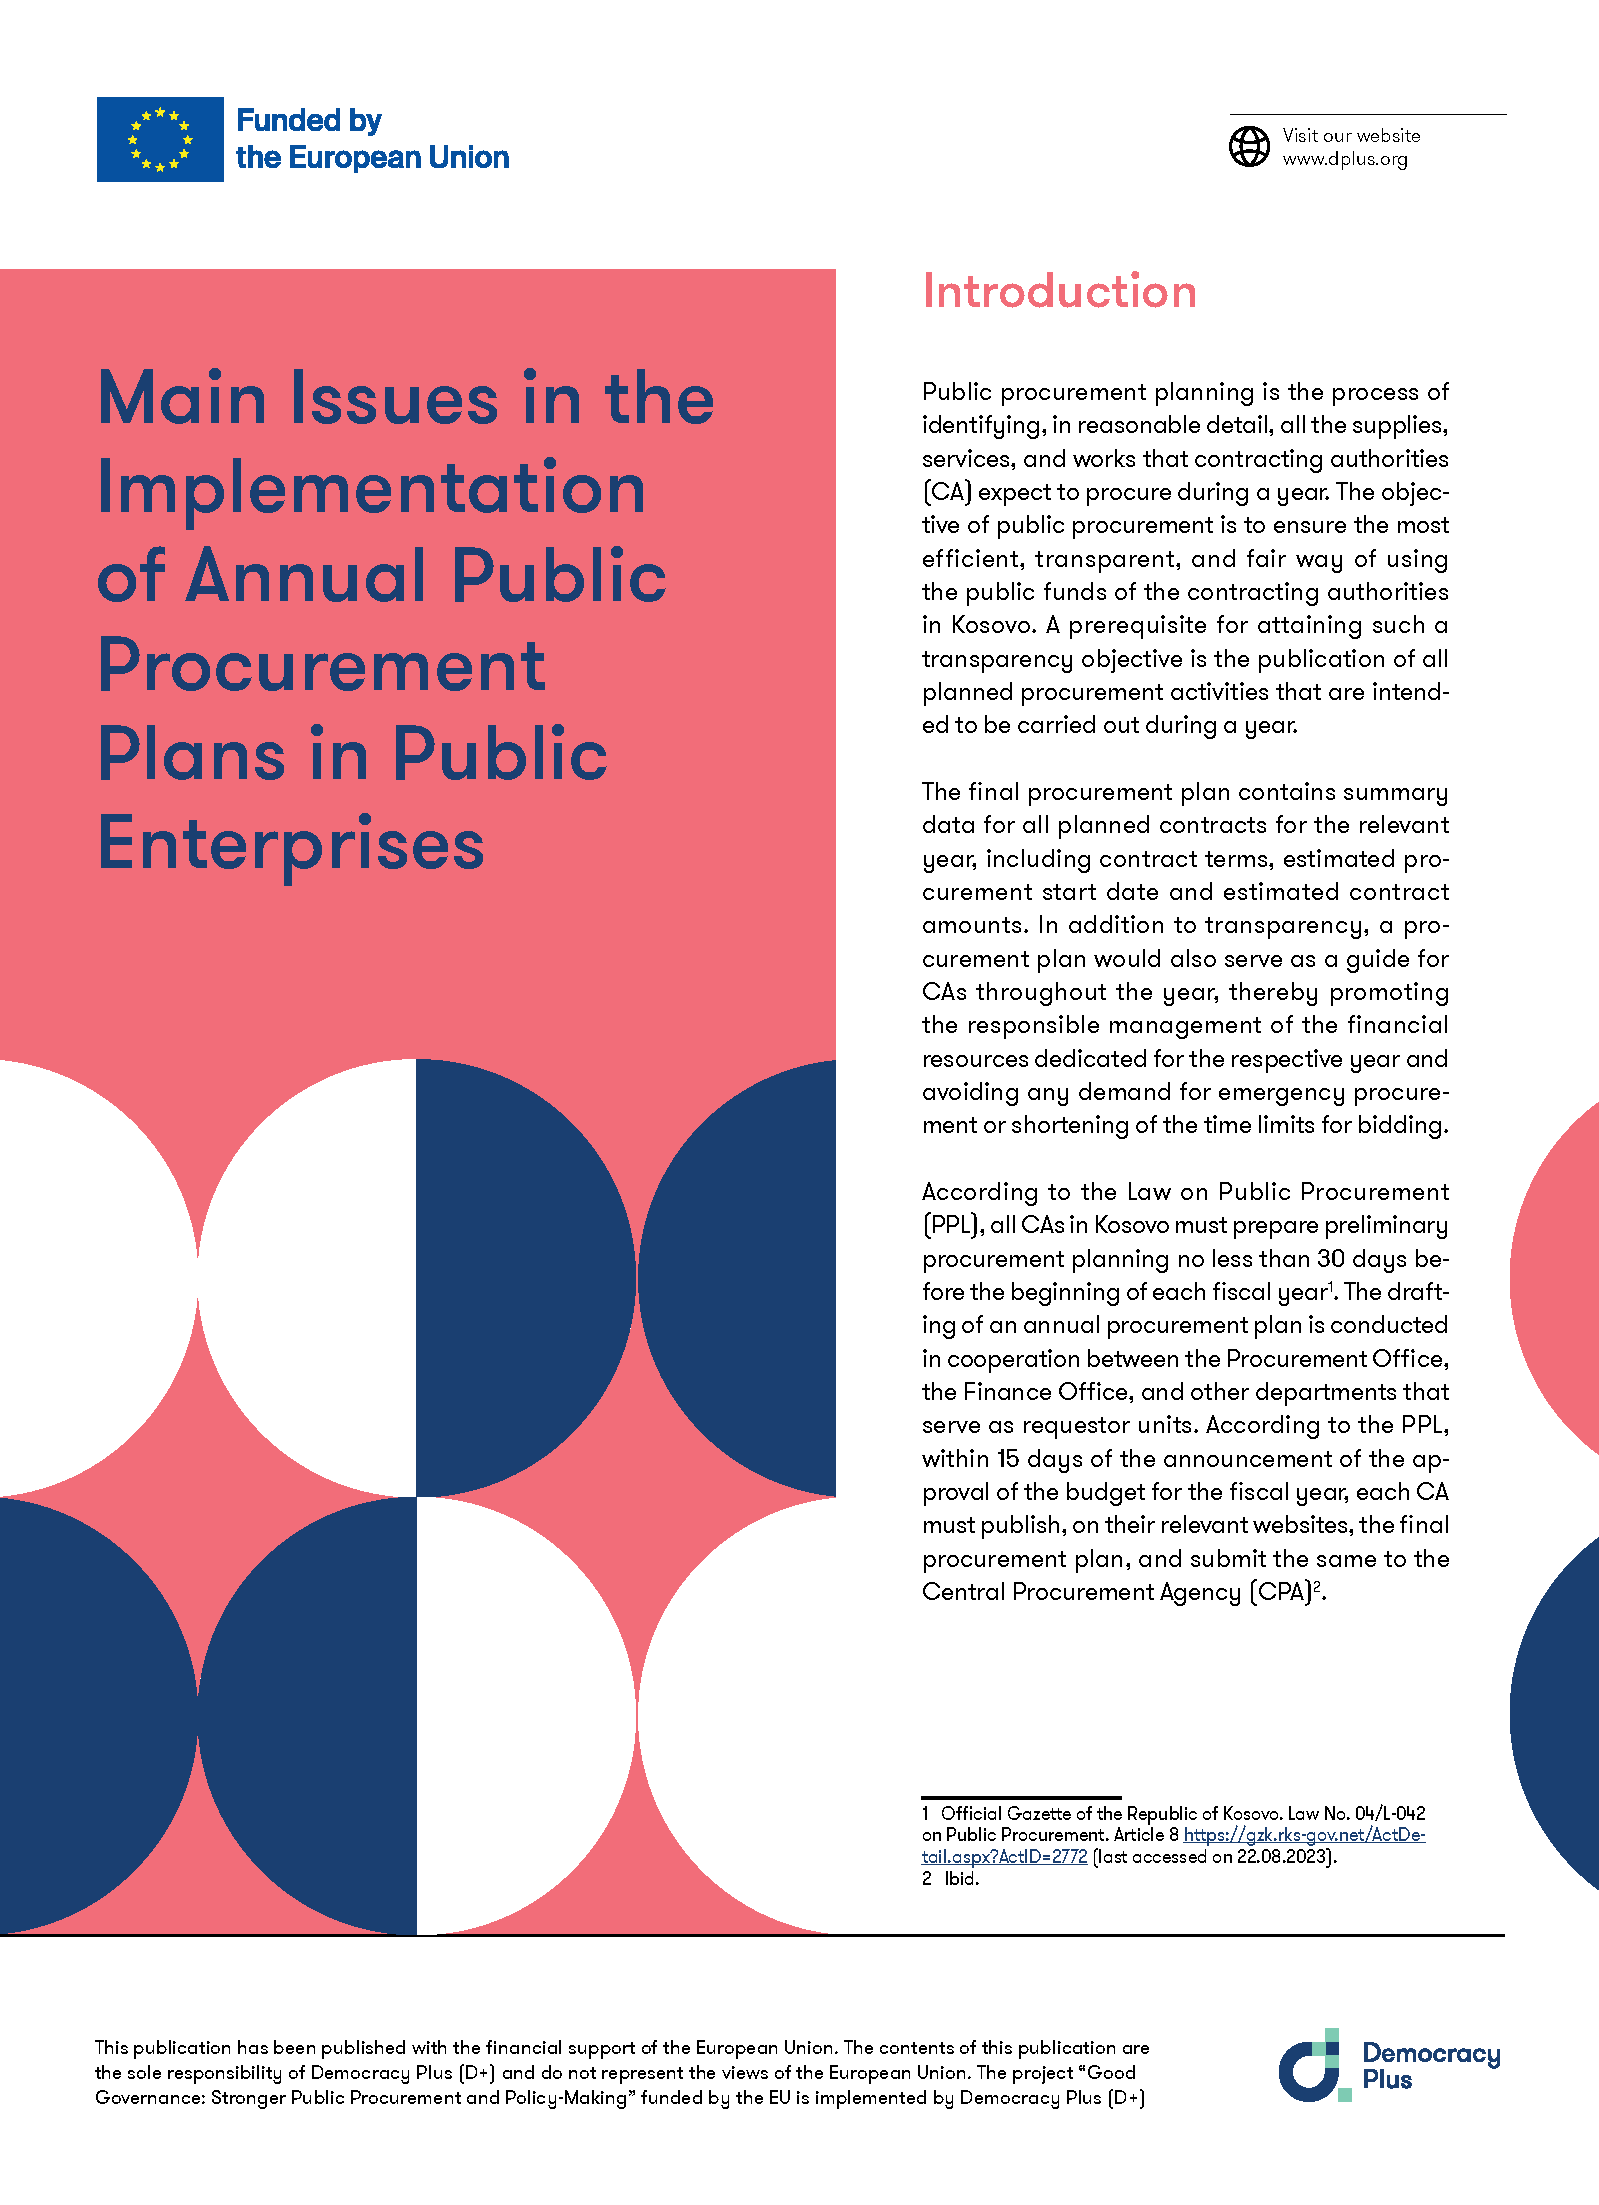 Main Issues in the Implementation of Annual Public Procurement Plans in Public Enterprises